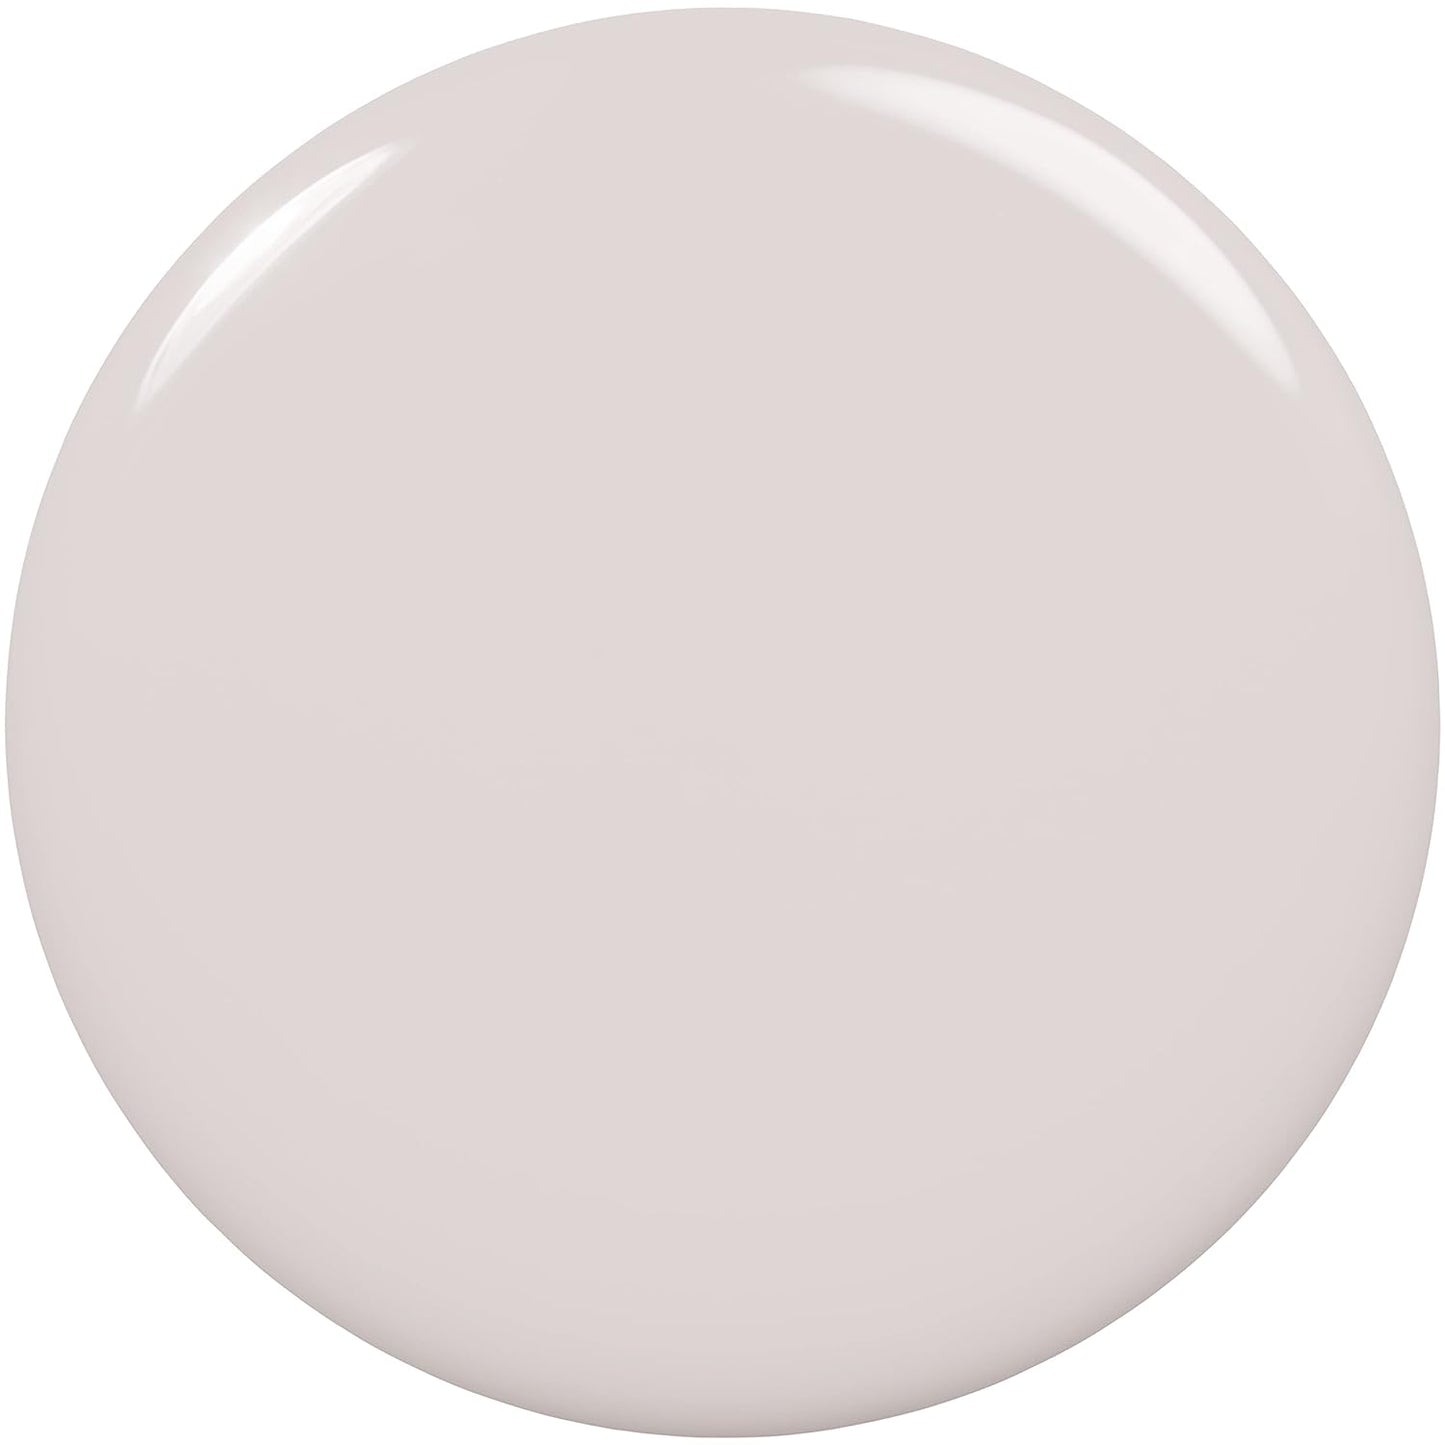 essie Salon-Quality Nail Polish, 8-Free Vegan, Cool Light Gray, Cut It Out, 0.46 fl oz